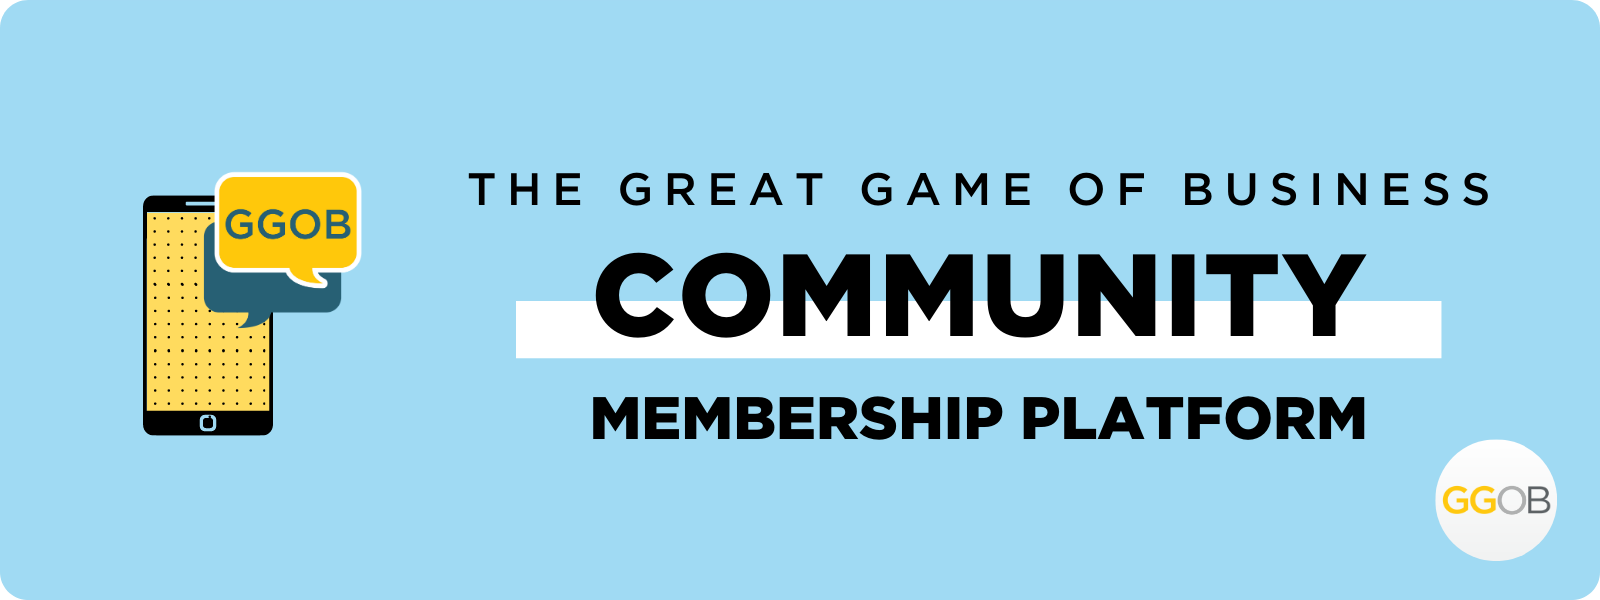 The Great Game of Business Community Membership Platform